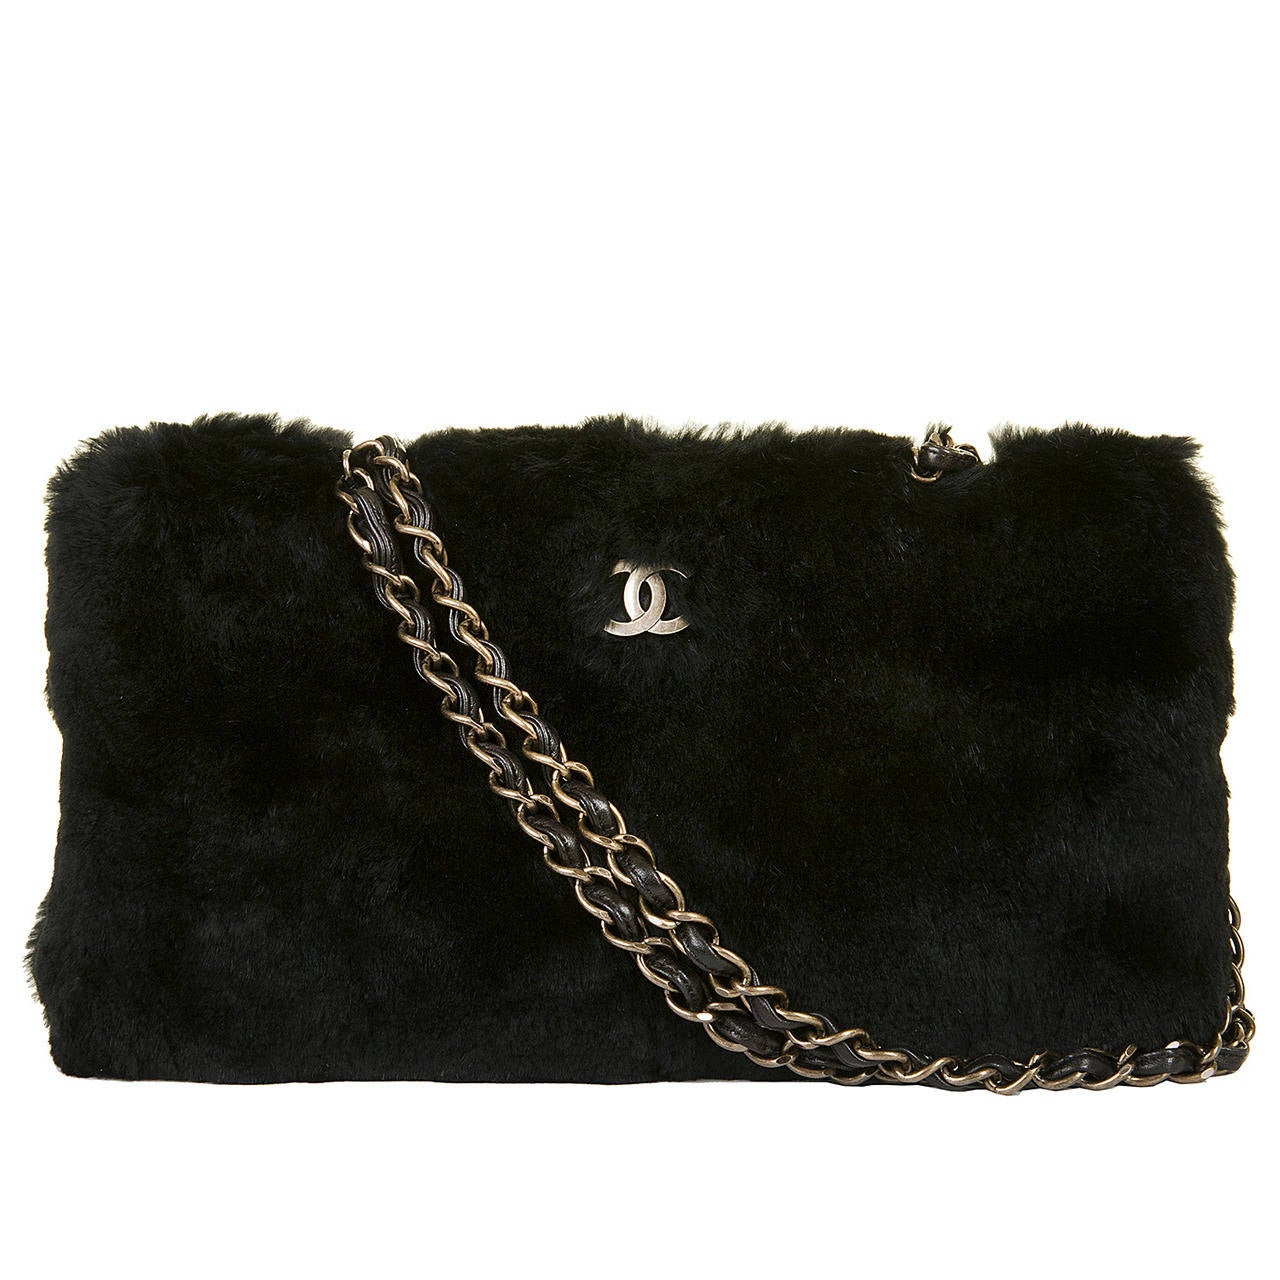 SO SO RARE! Chanel Jumbo Shoulder Bag, Black Fur with Patinated bronze Hardware